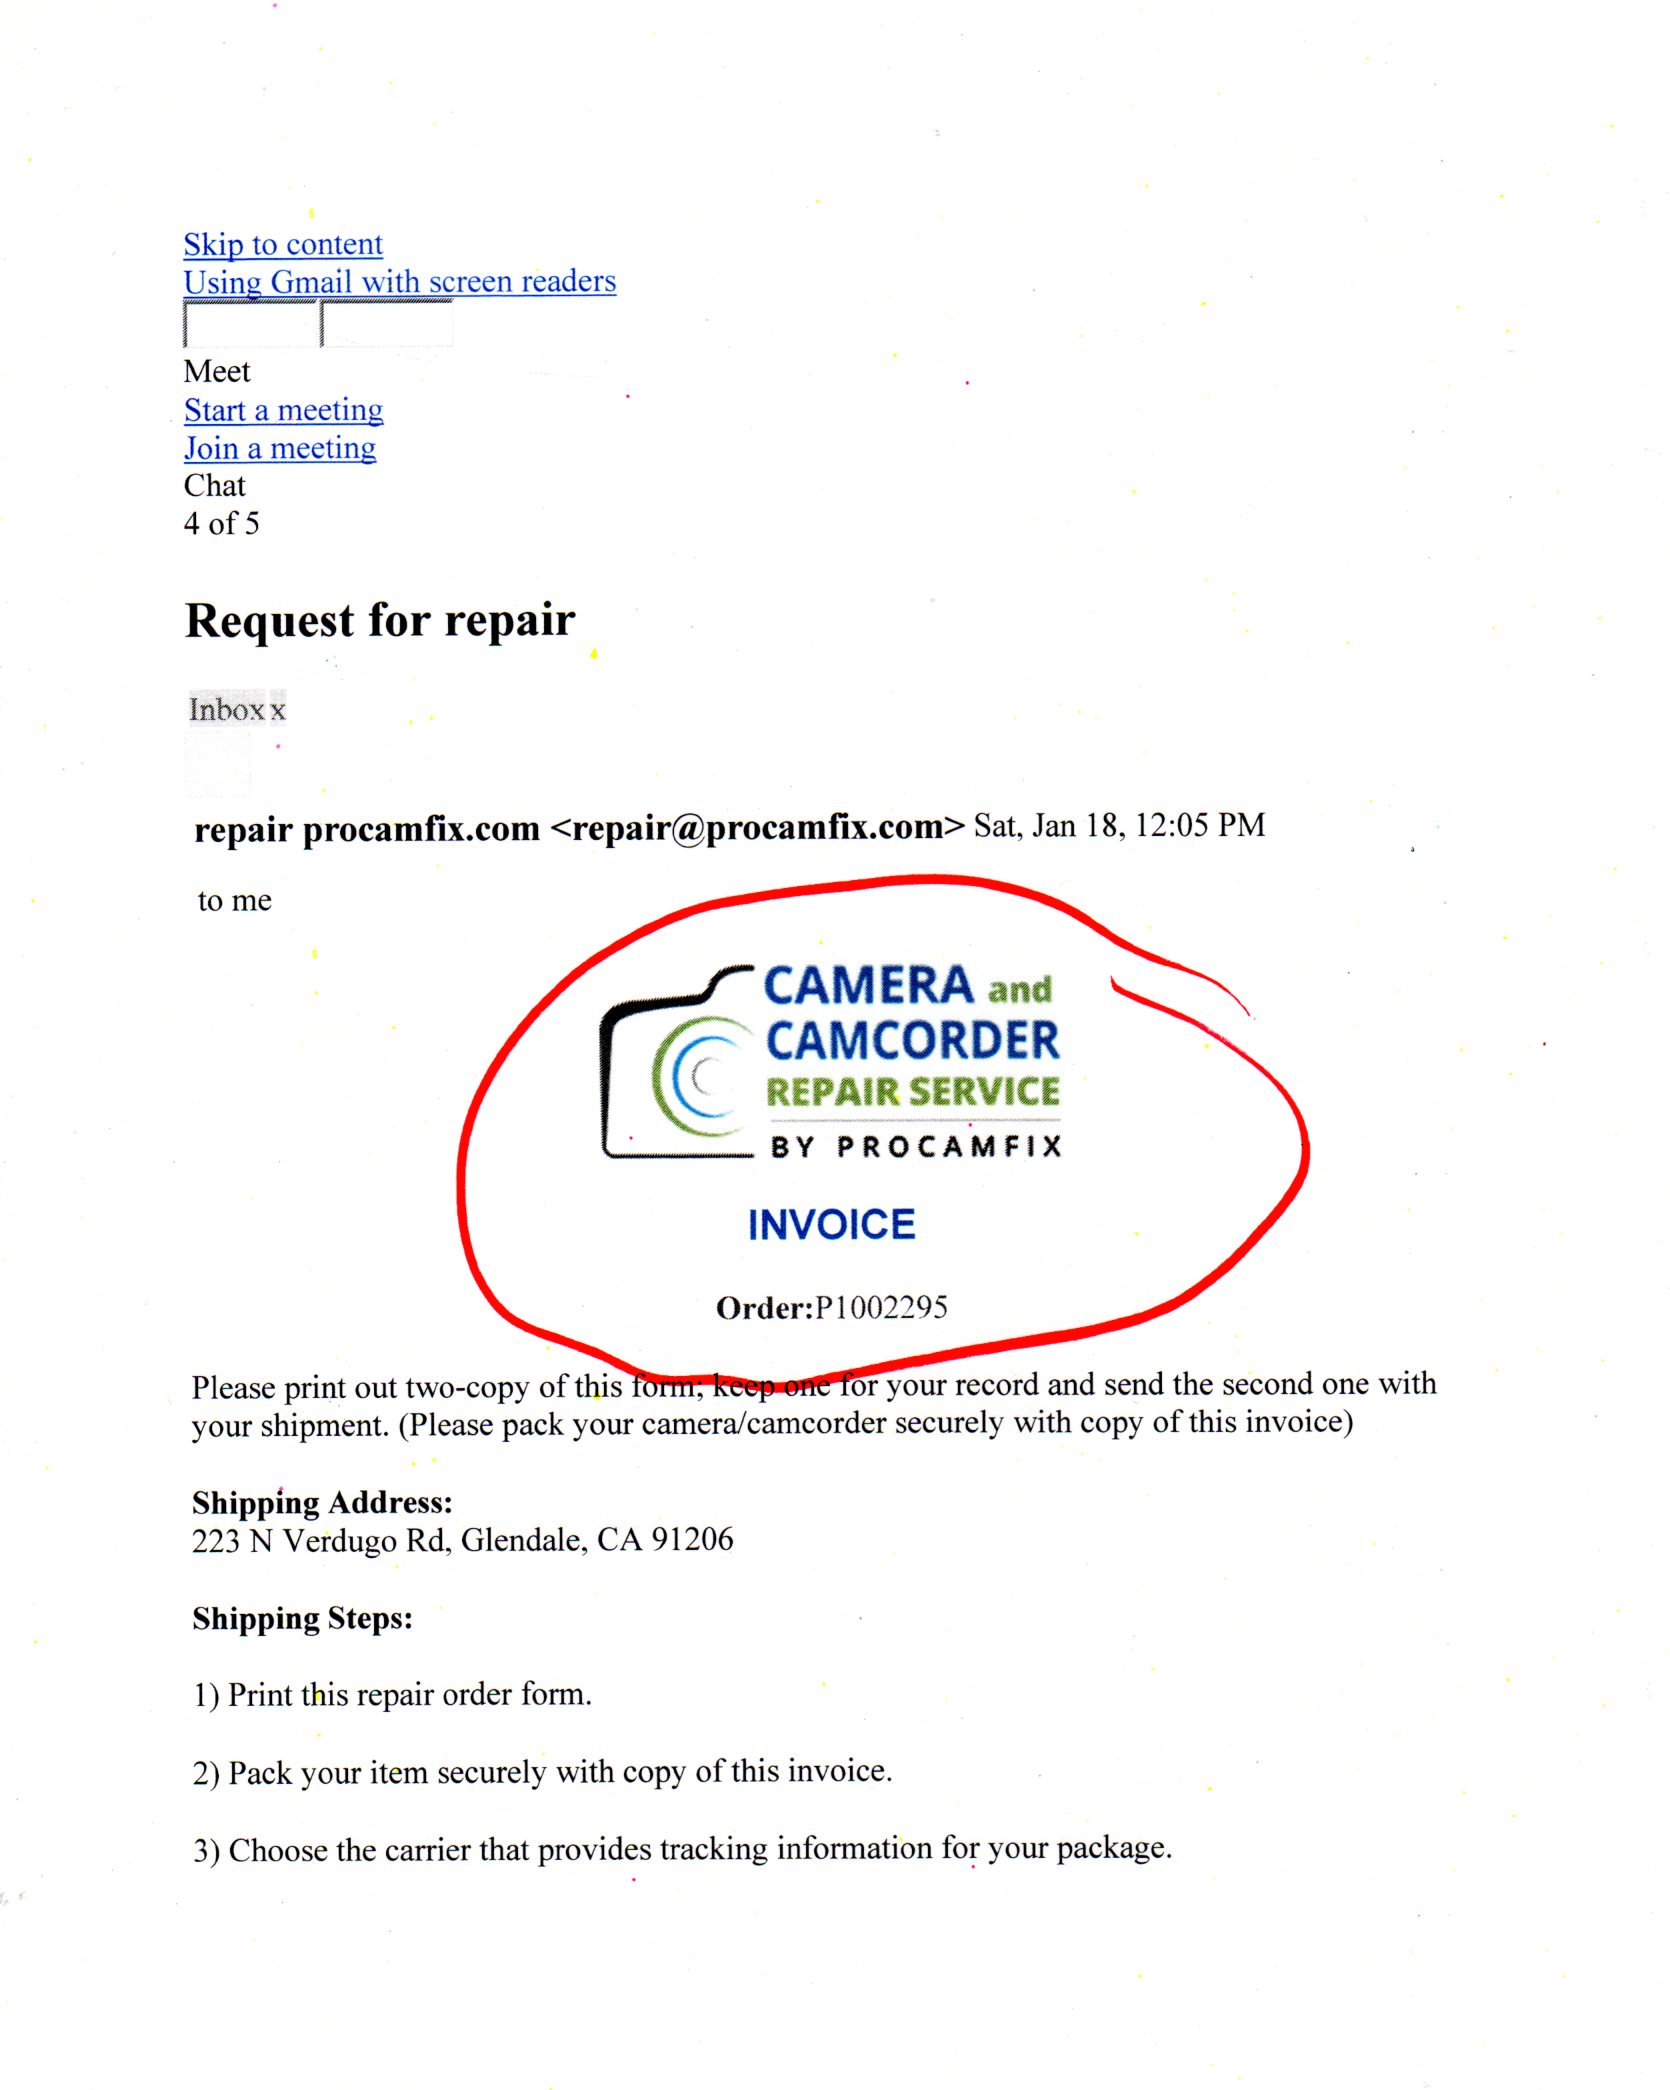 Pro Cam Fix Invoice for Request For Repair.